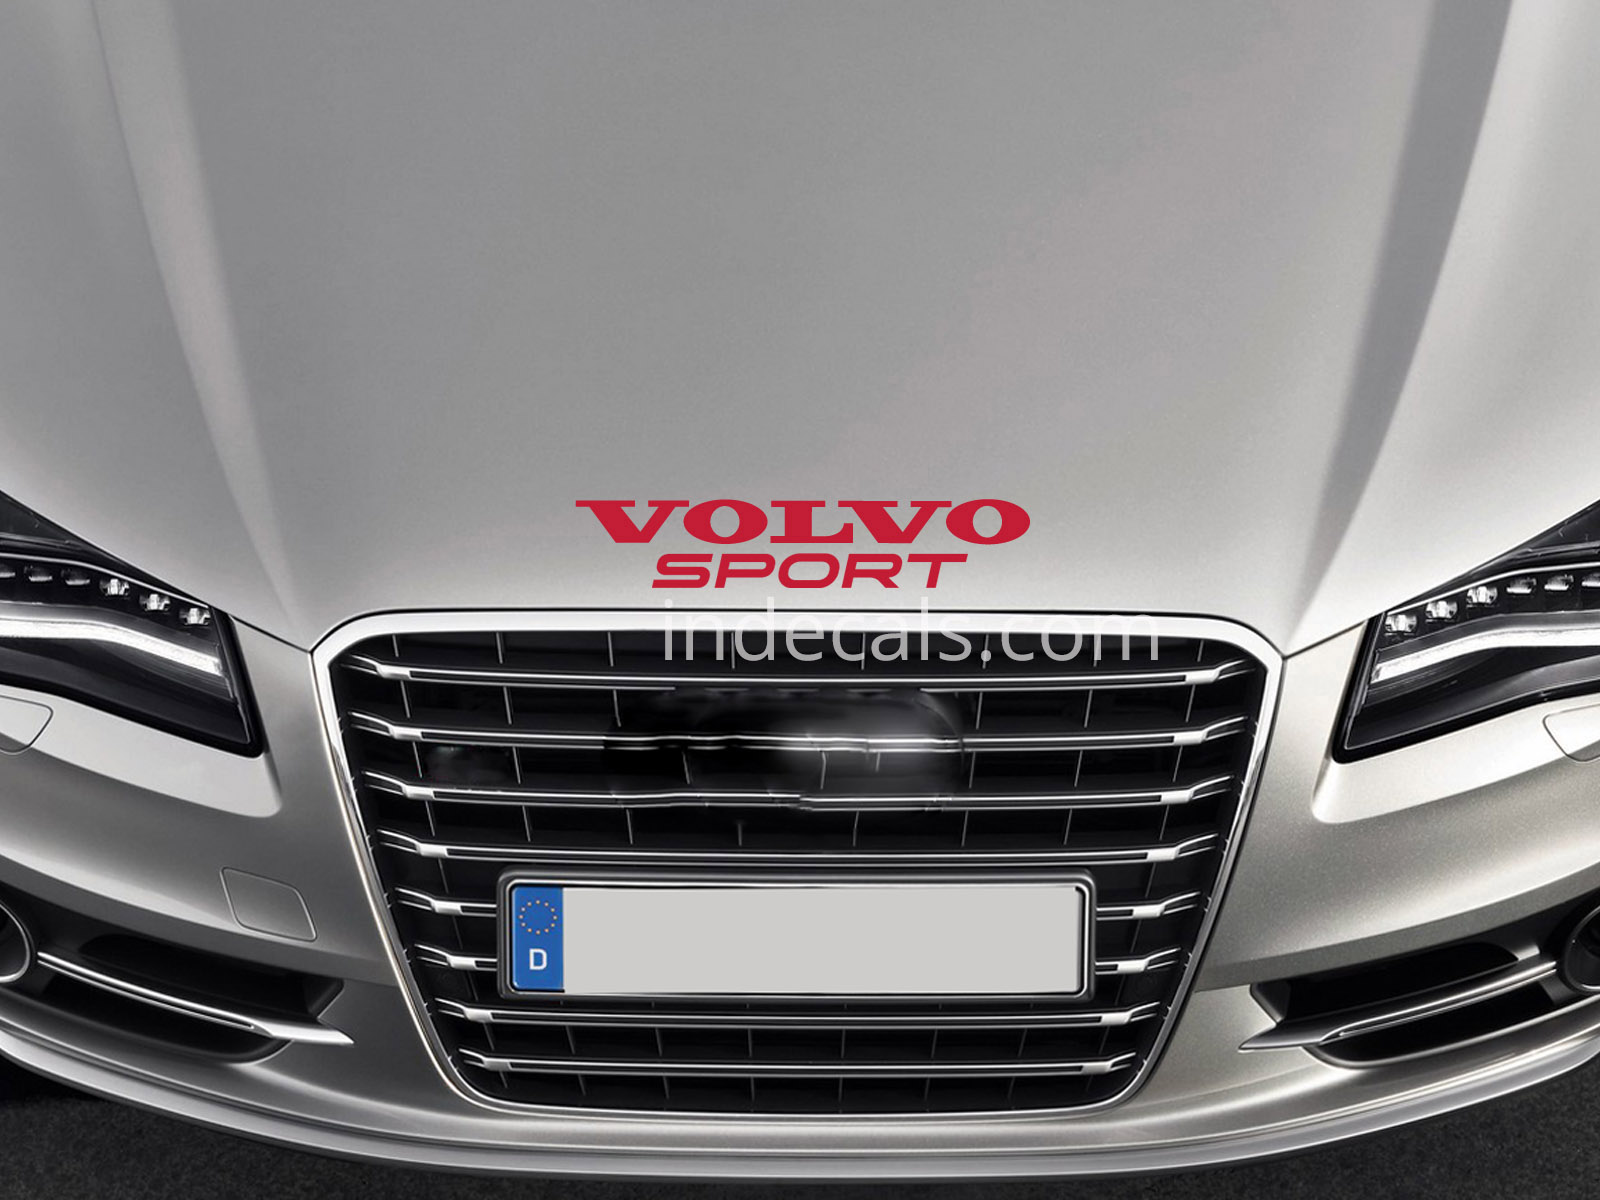 1 x Volvo Sport Sticker for Bonnet - Red